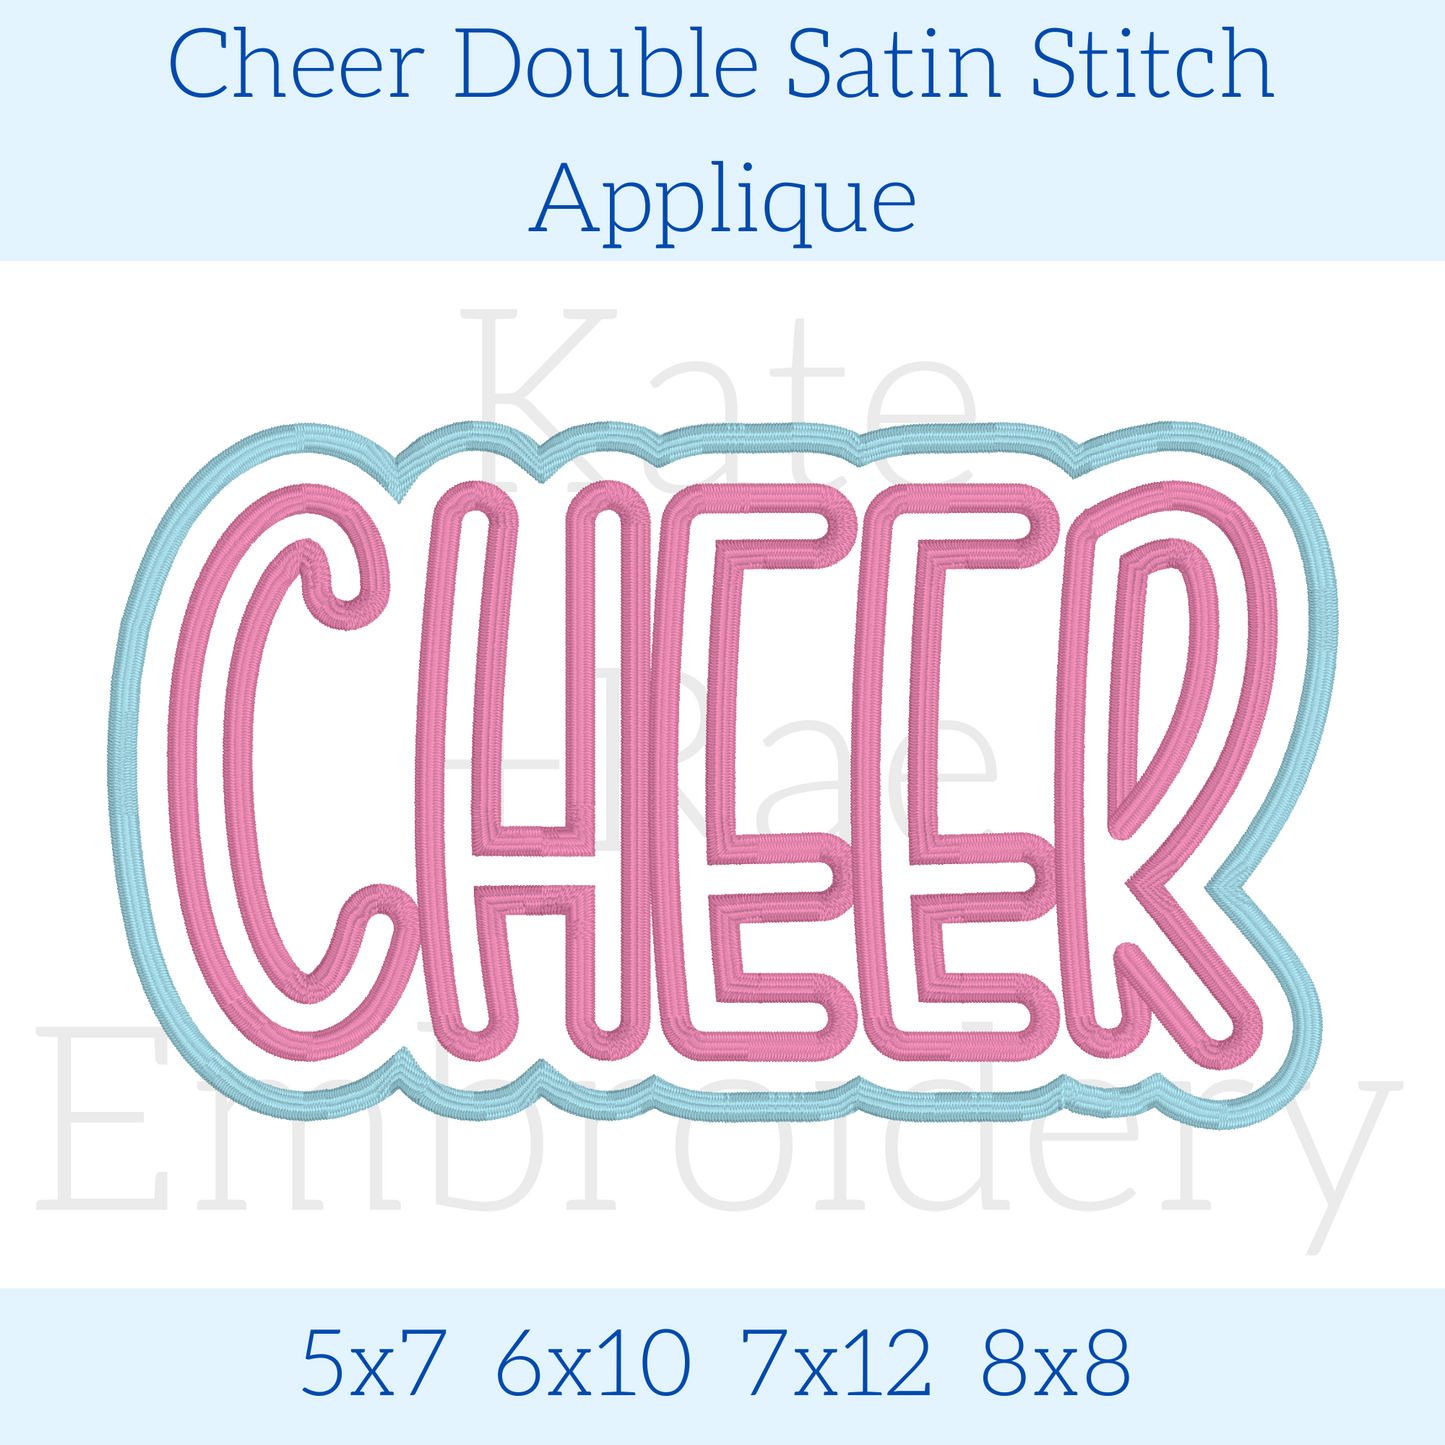 Cheer Double Satin Stitch Applique Embroidery Design